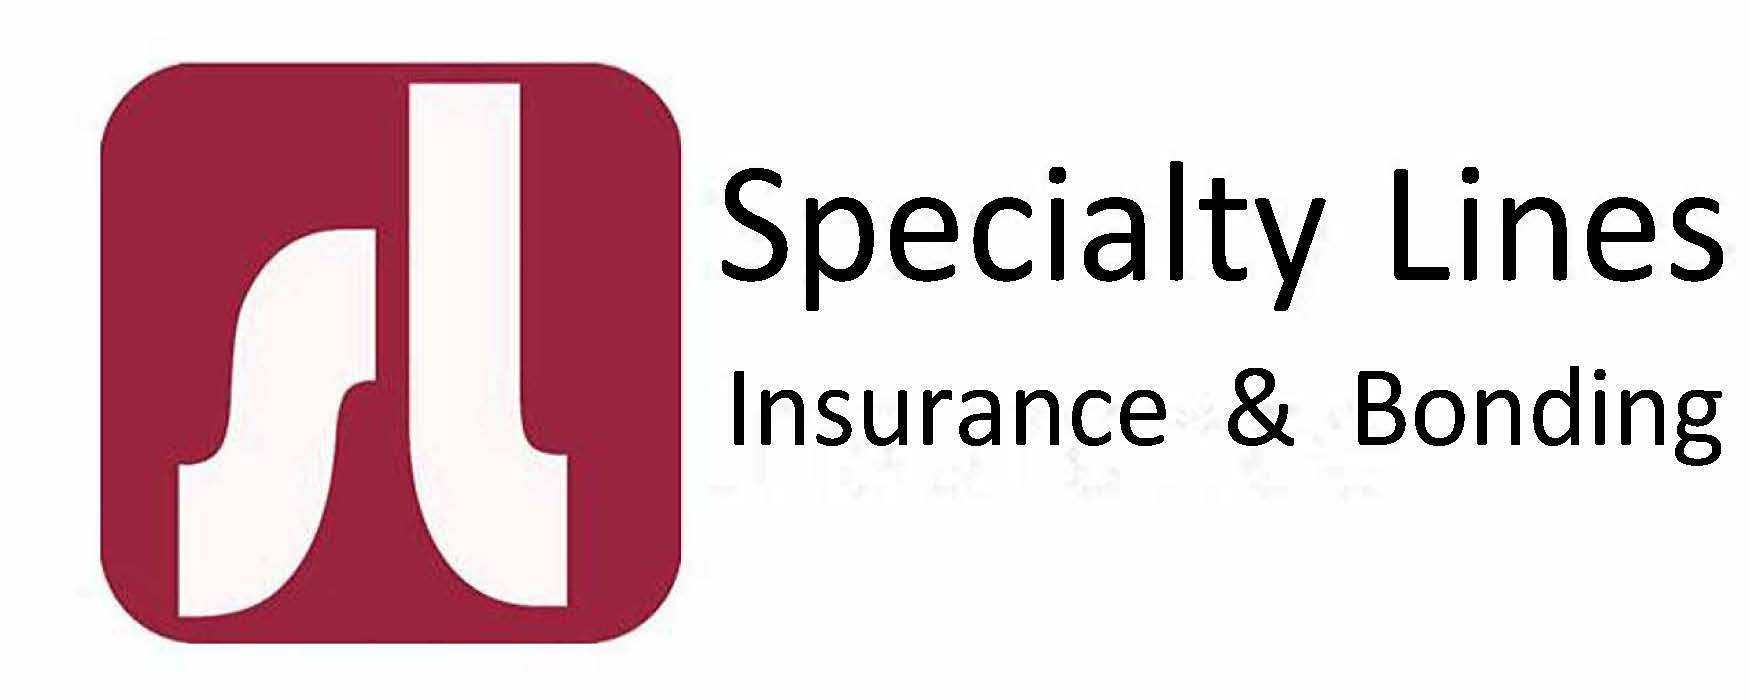 Specialty Lines insurance & bonding